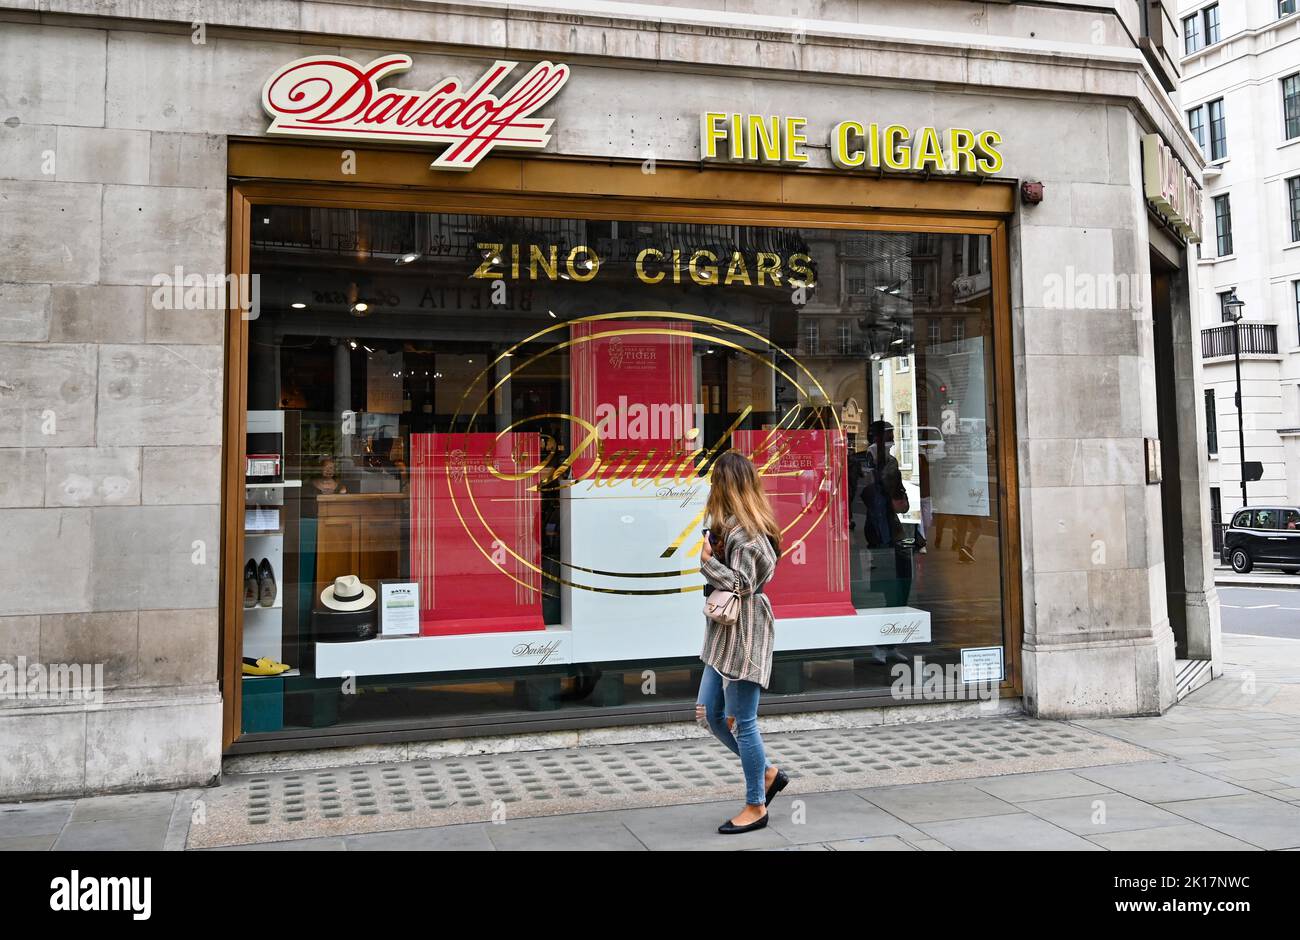 London Views - Tienda Davidoff Fine Cigars en la esquina de Jermyn Street y St James's Street Foto de stock